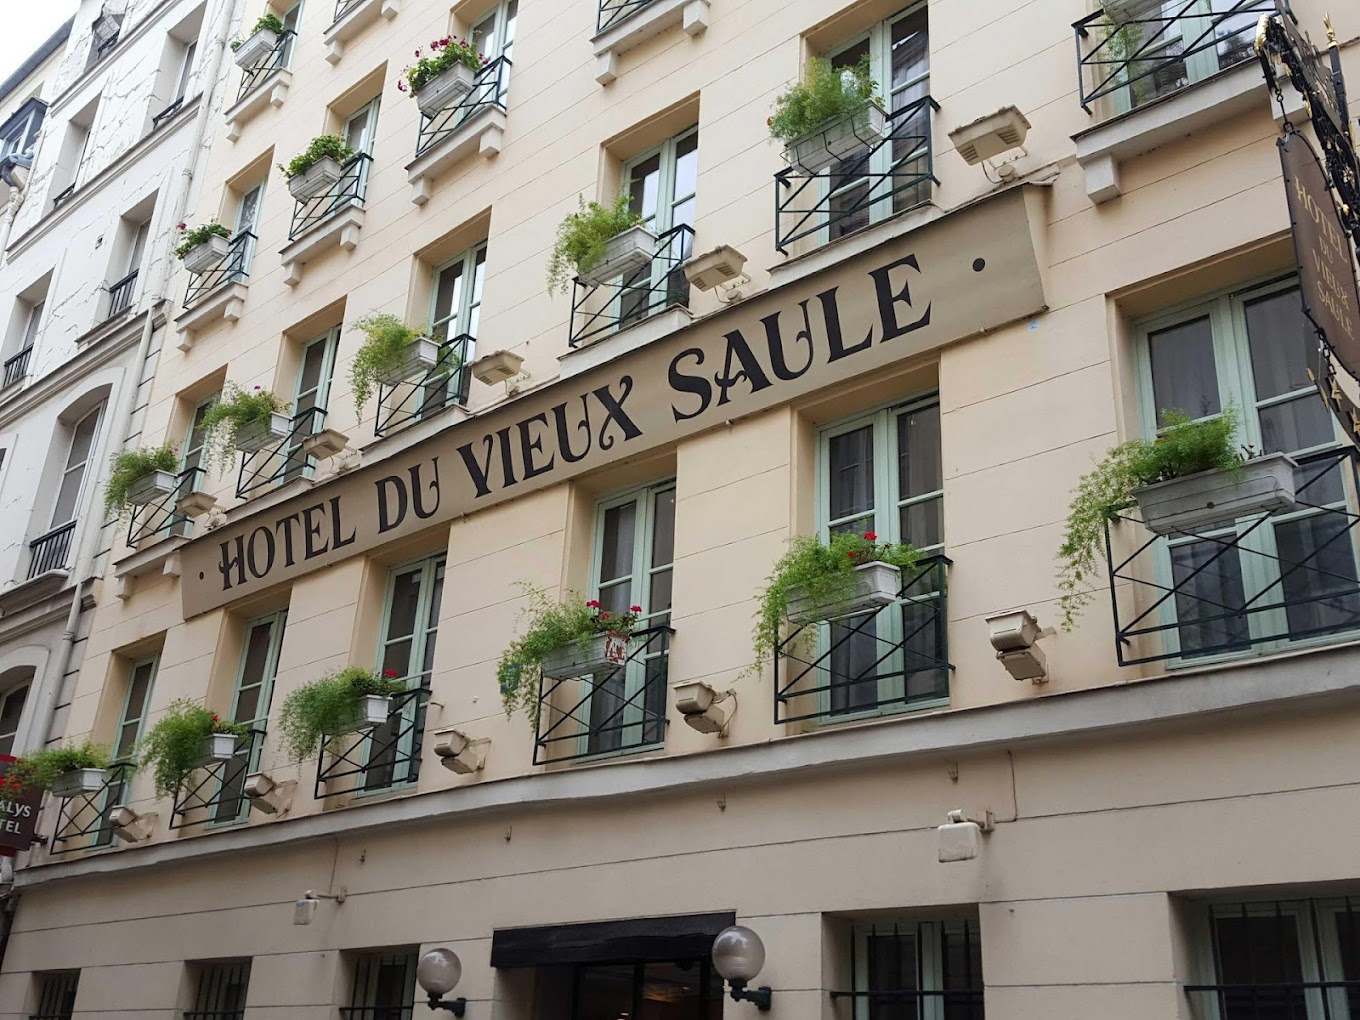 Hotel du Vieux Saulé